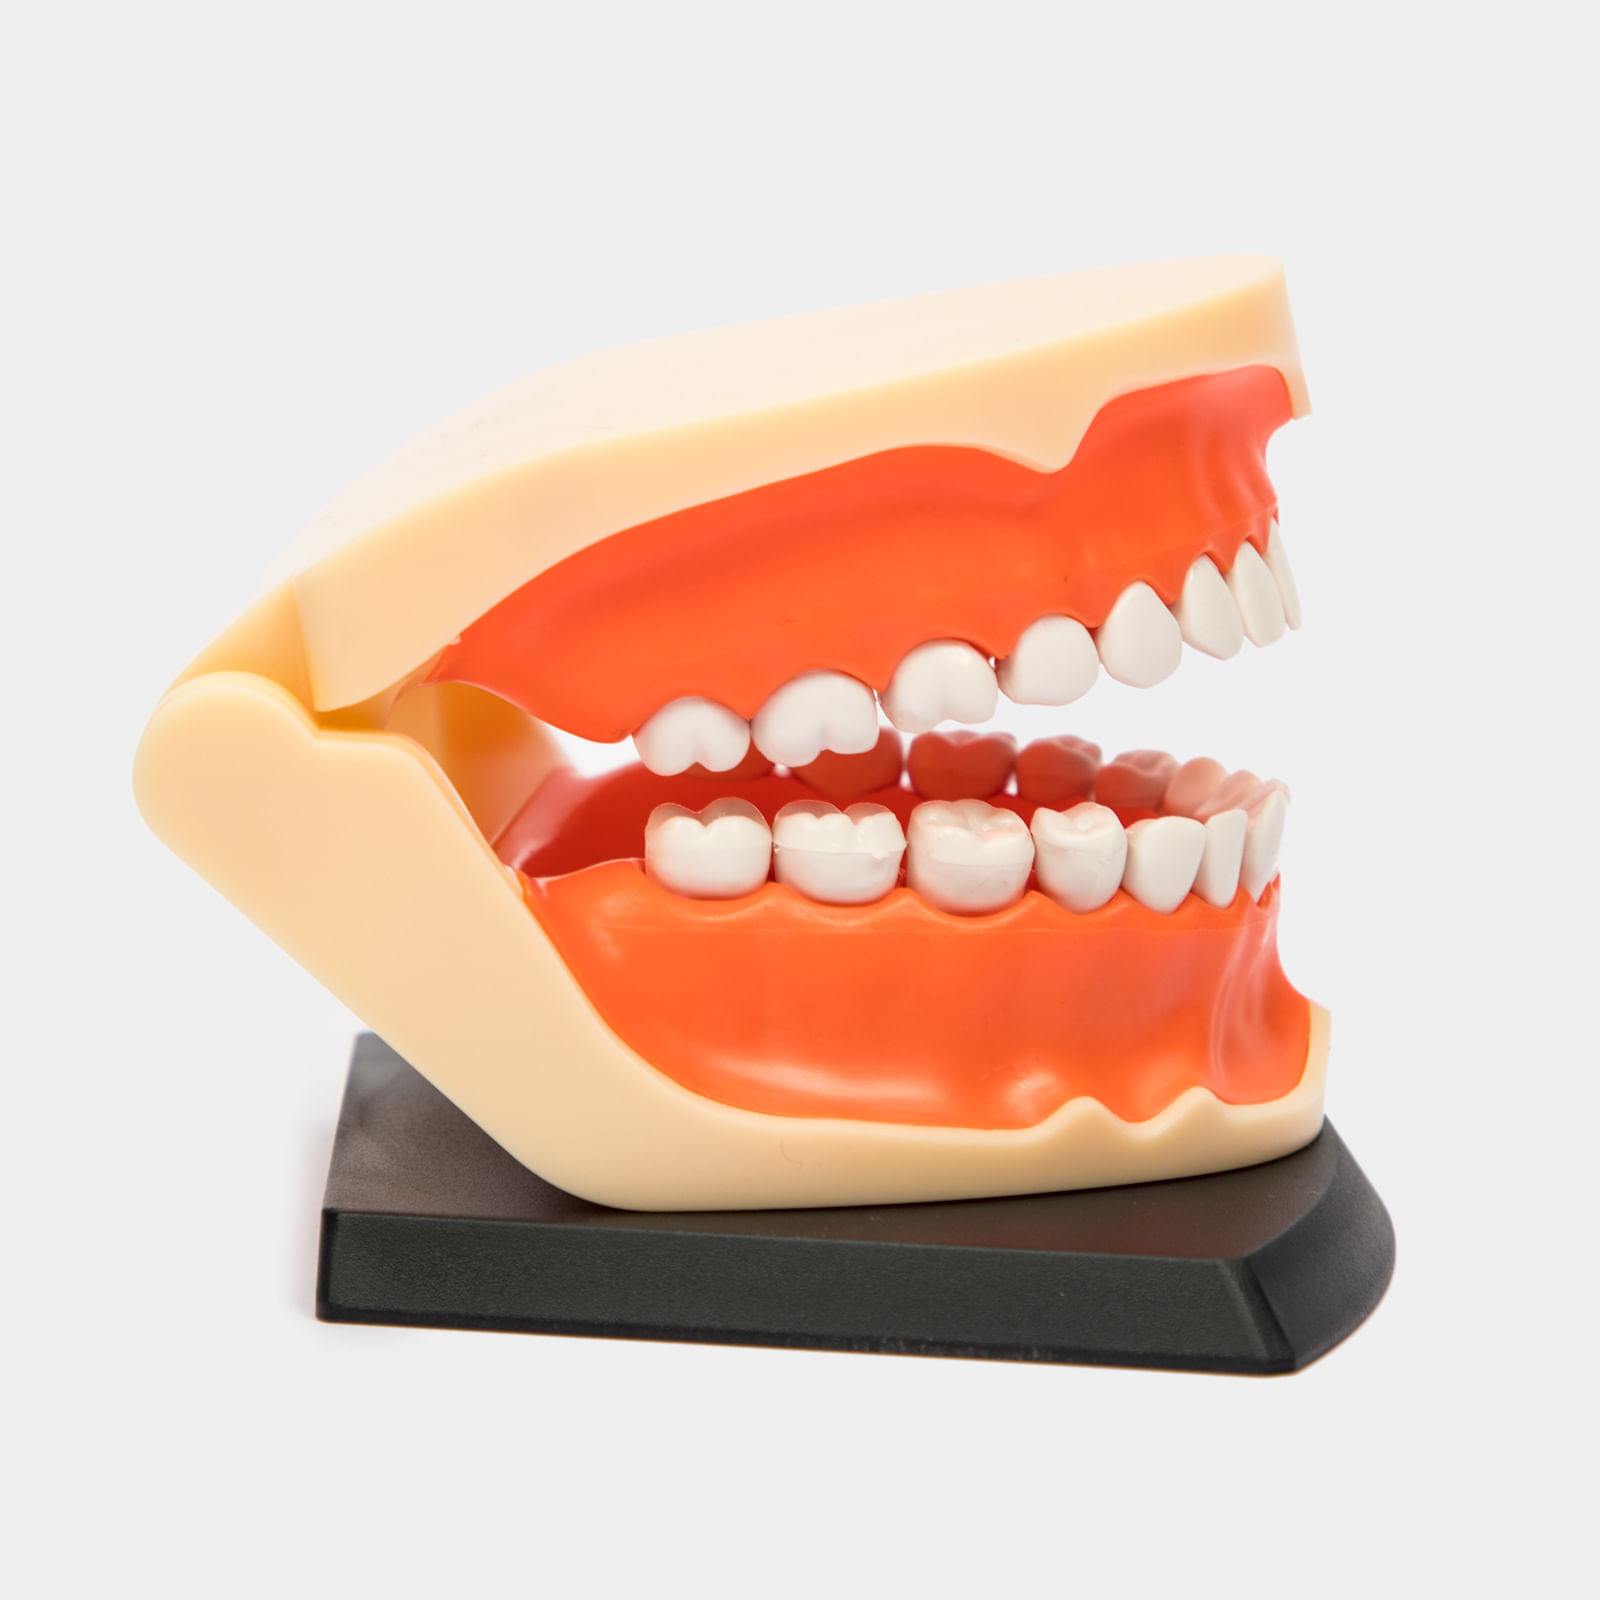 Modelo anatómico: dentadura de adulto x 41 piezas